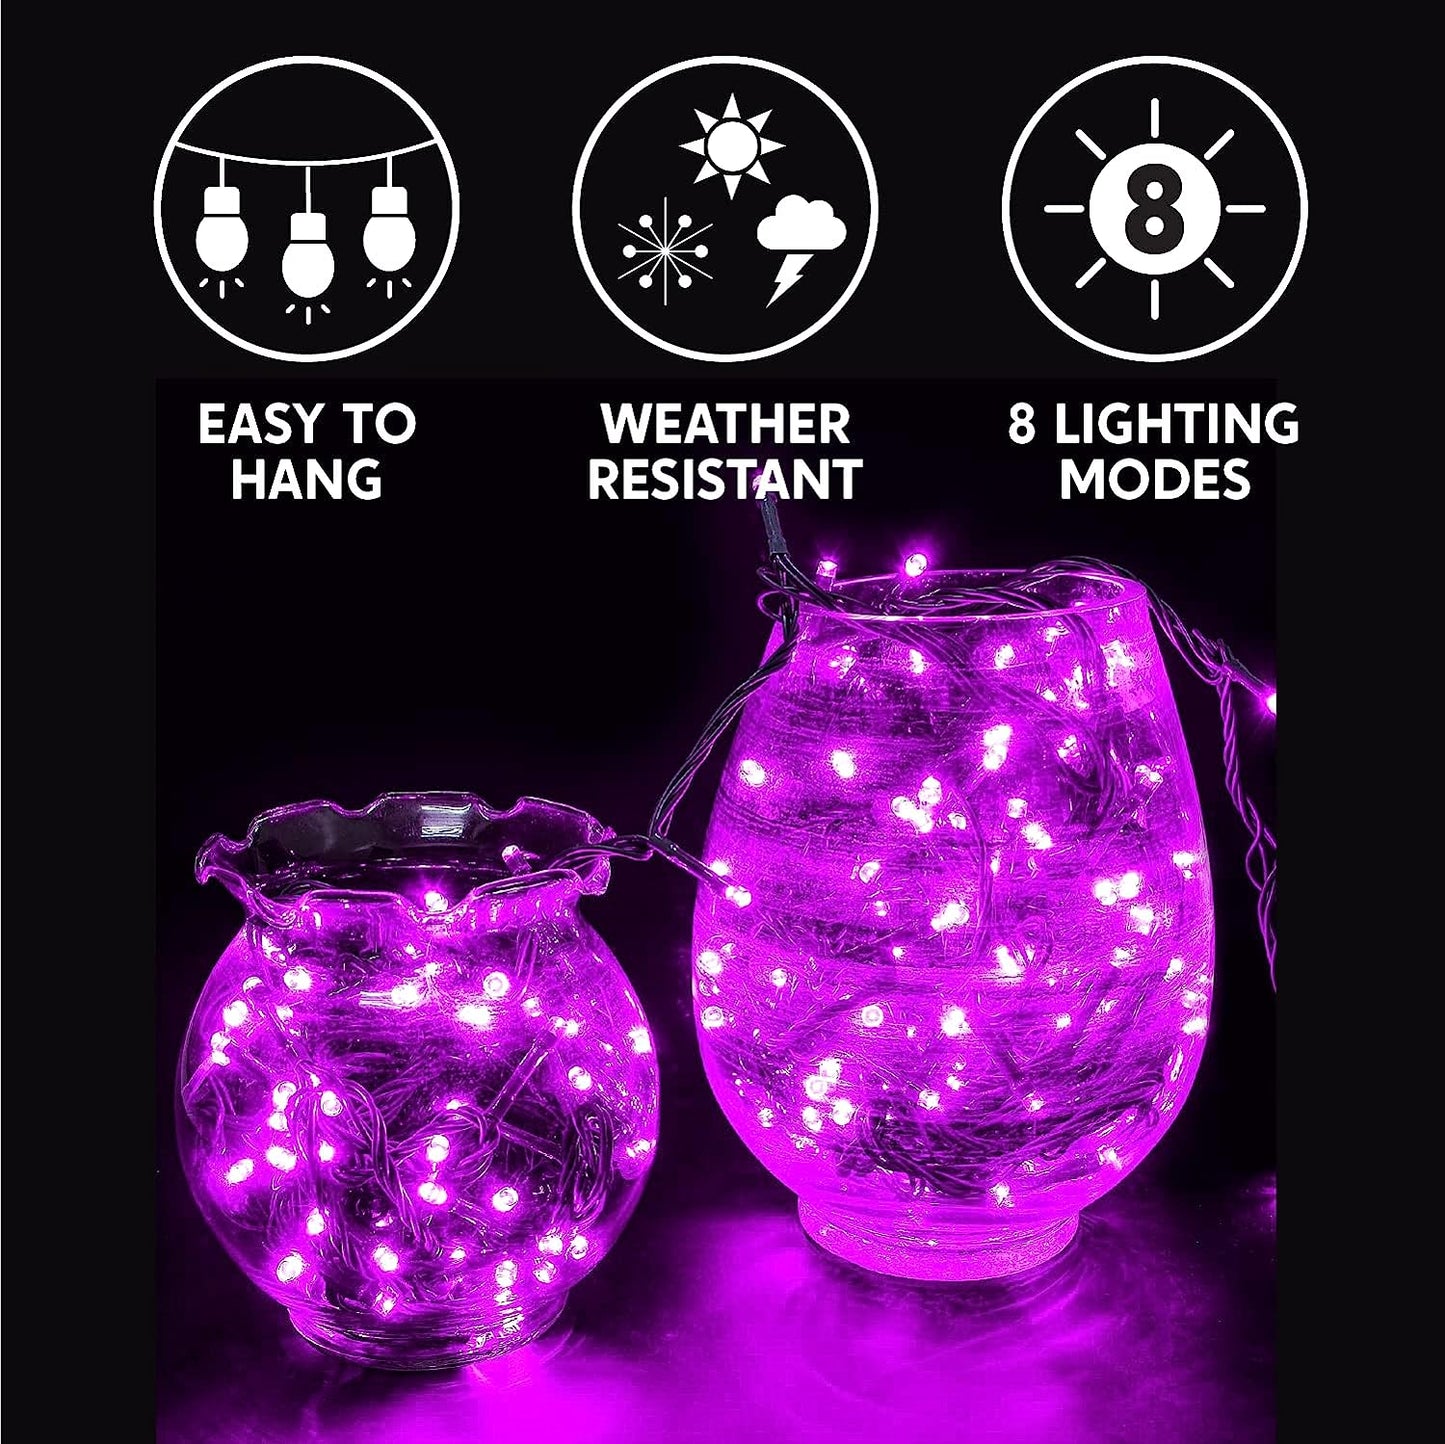 300-Count Purple LED Mini String Lights, 8 Modes